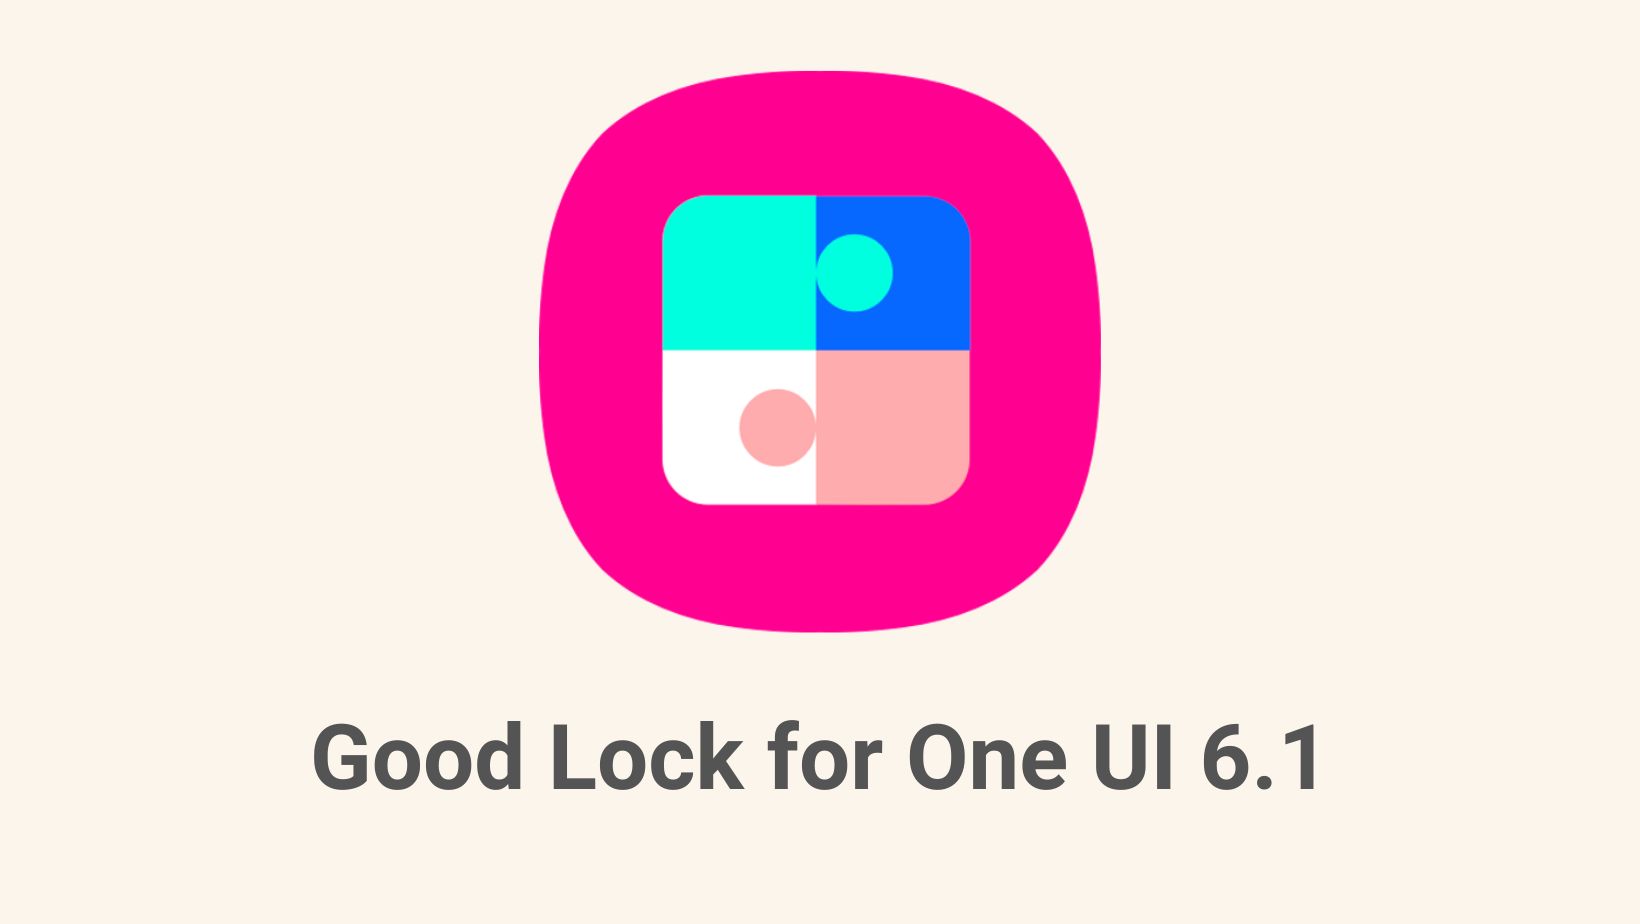 Good Lock for One UI 6.1 brings AOD brightness slider, enable old gestures, and more [APK Download]